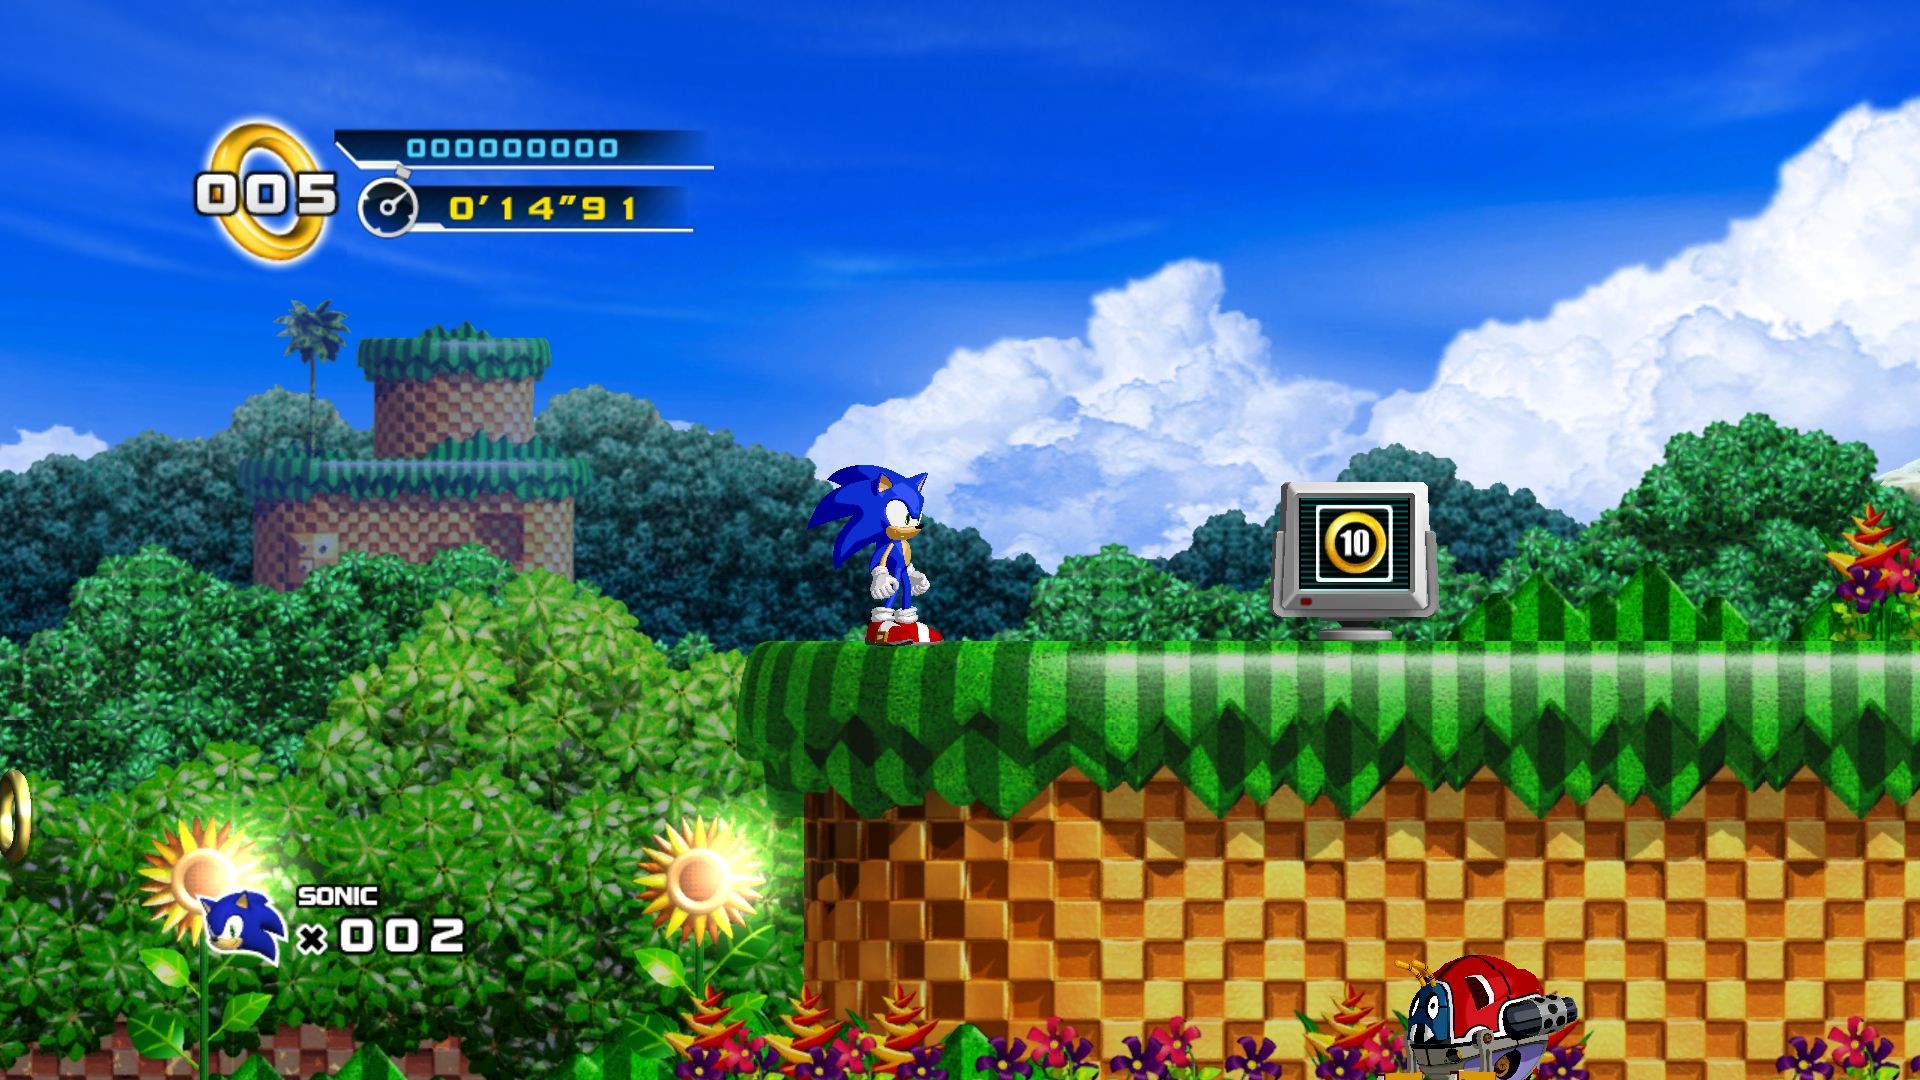 Video Game Sonic The Hedgehog 4: Episode I HD Wallpaper | Background Image